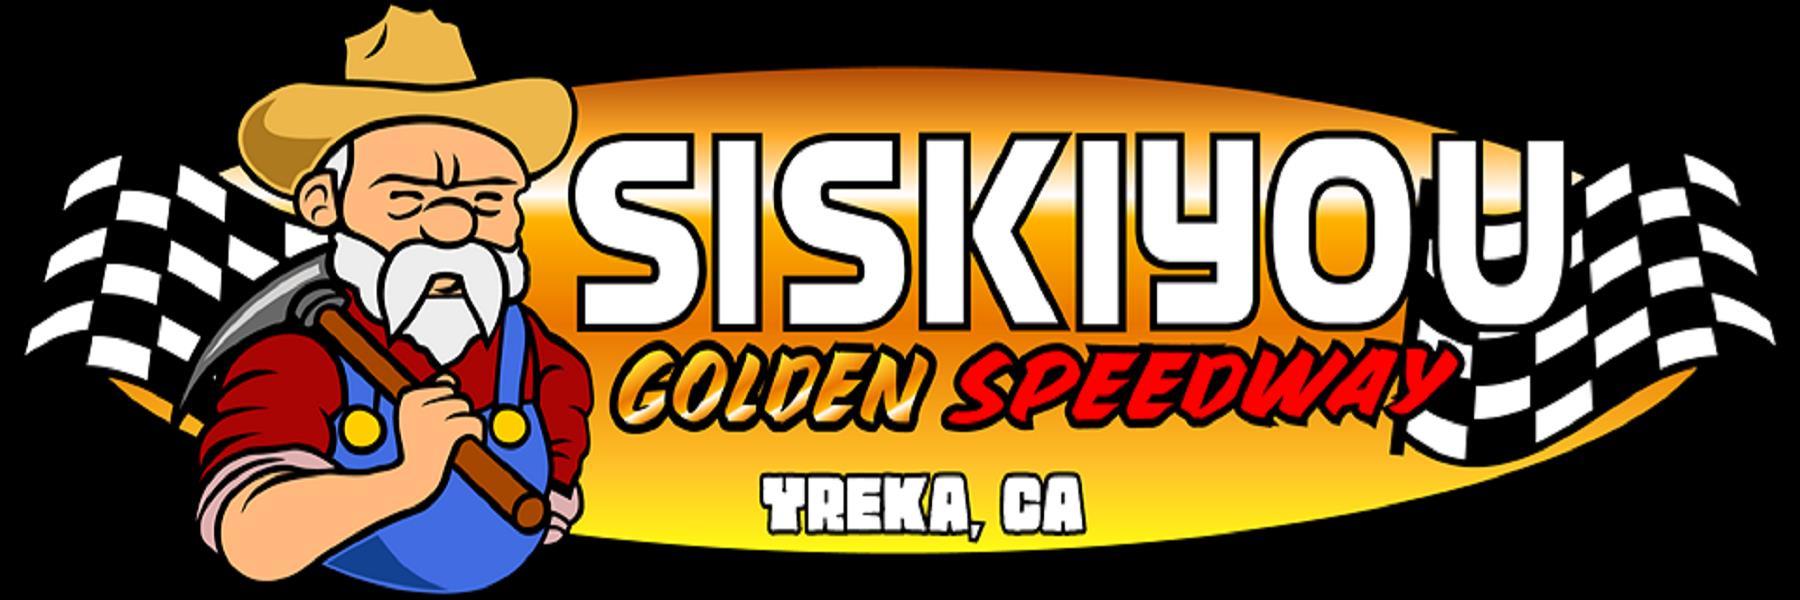 7/15/2022 - Siskiyou Golden Speedway